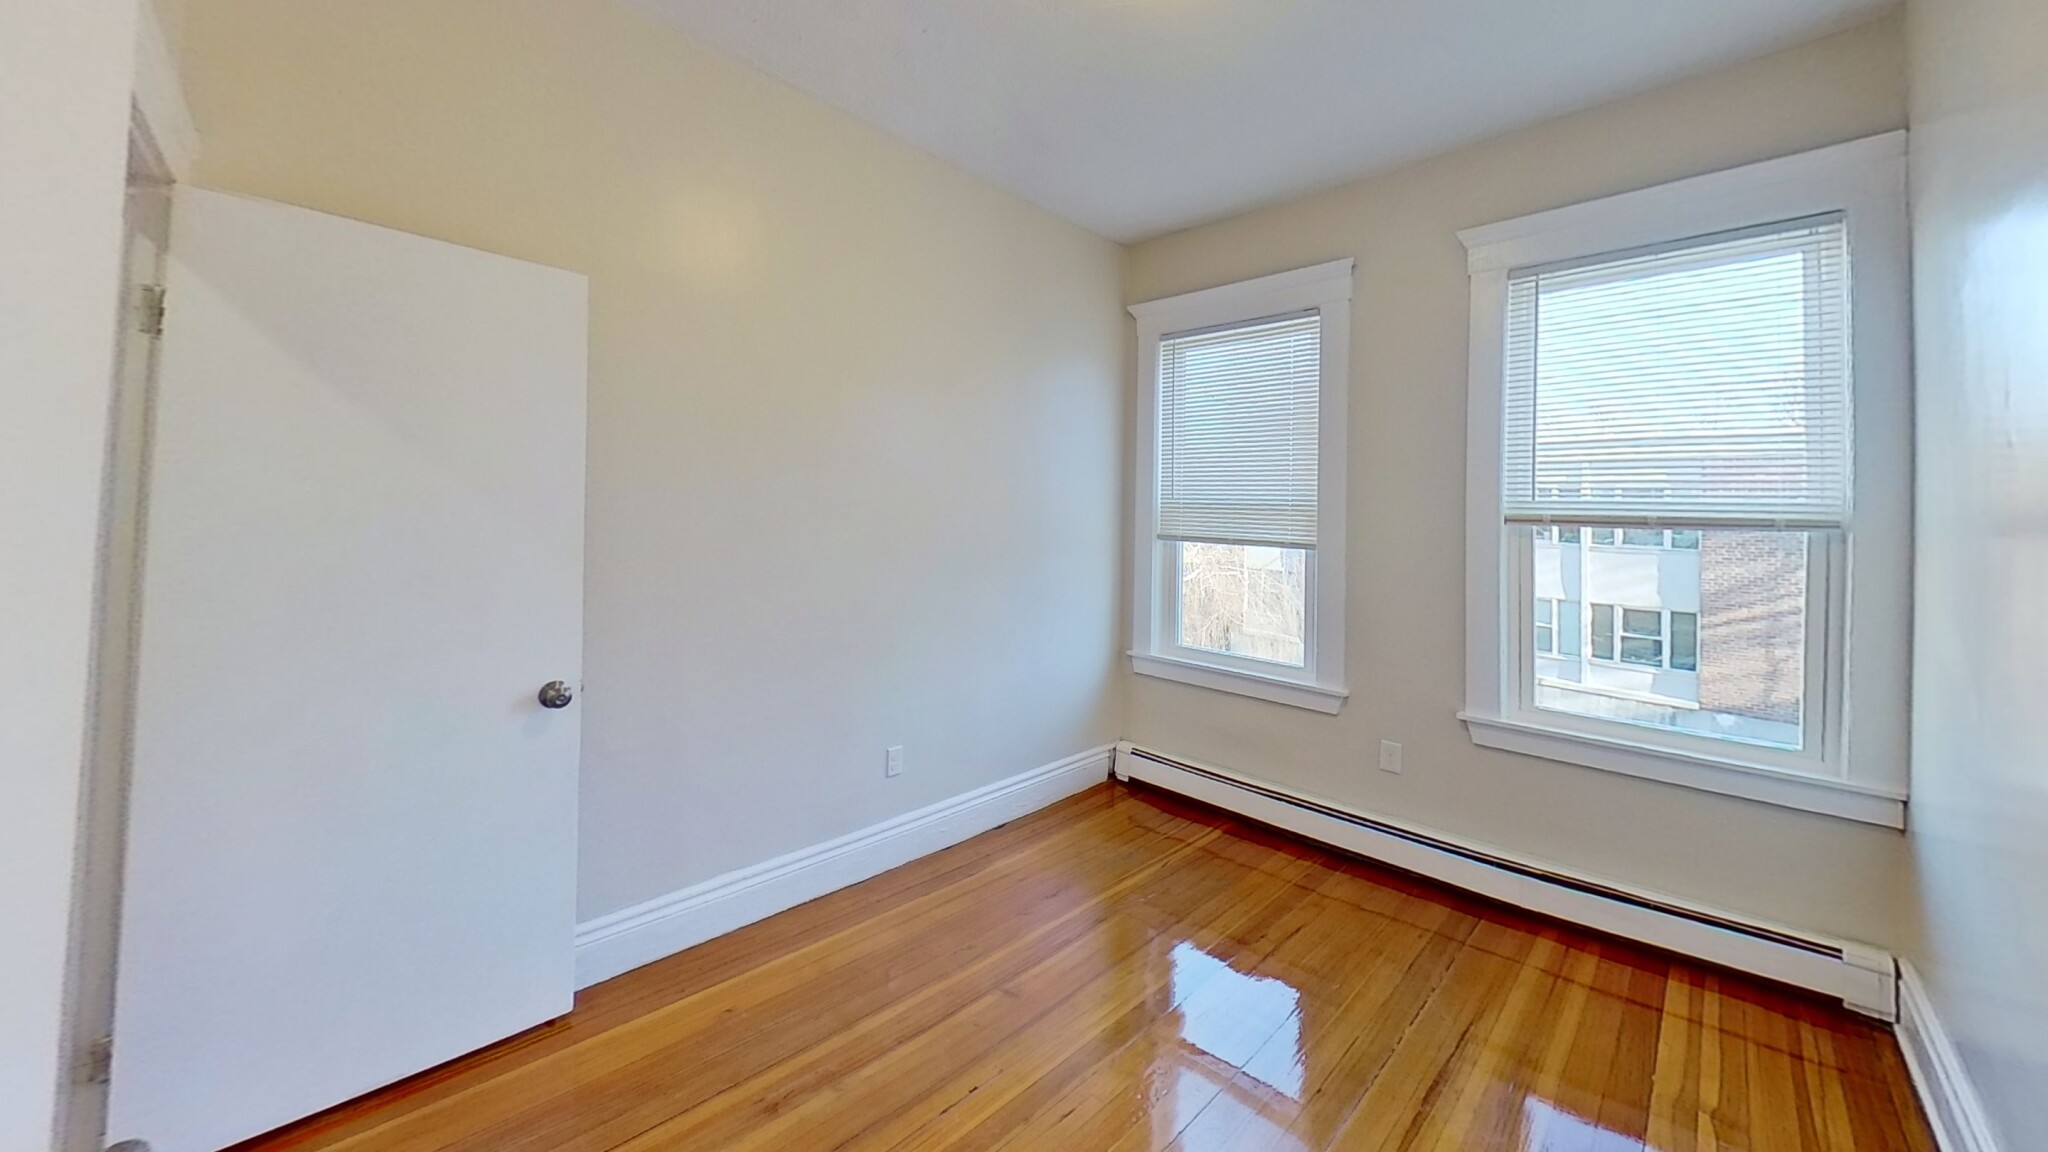 Photos of apartment on Harold St.,Boston MA 02121